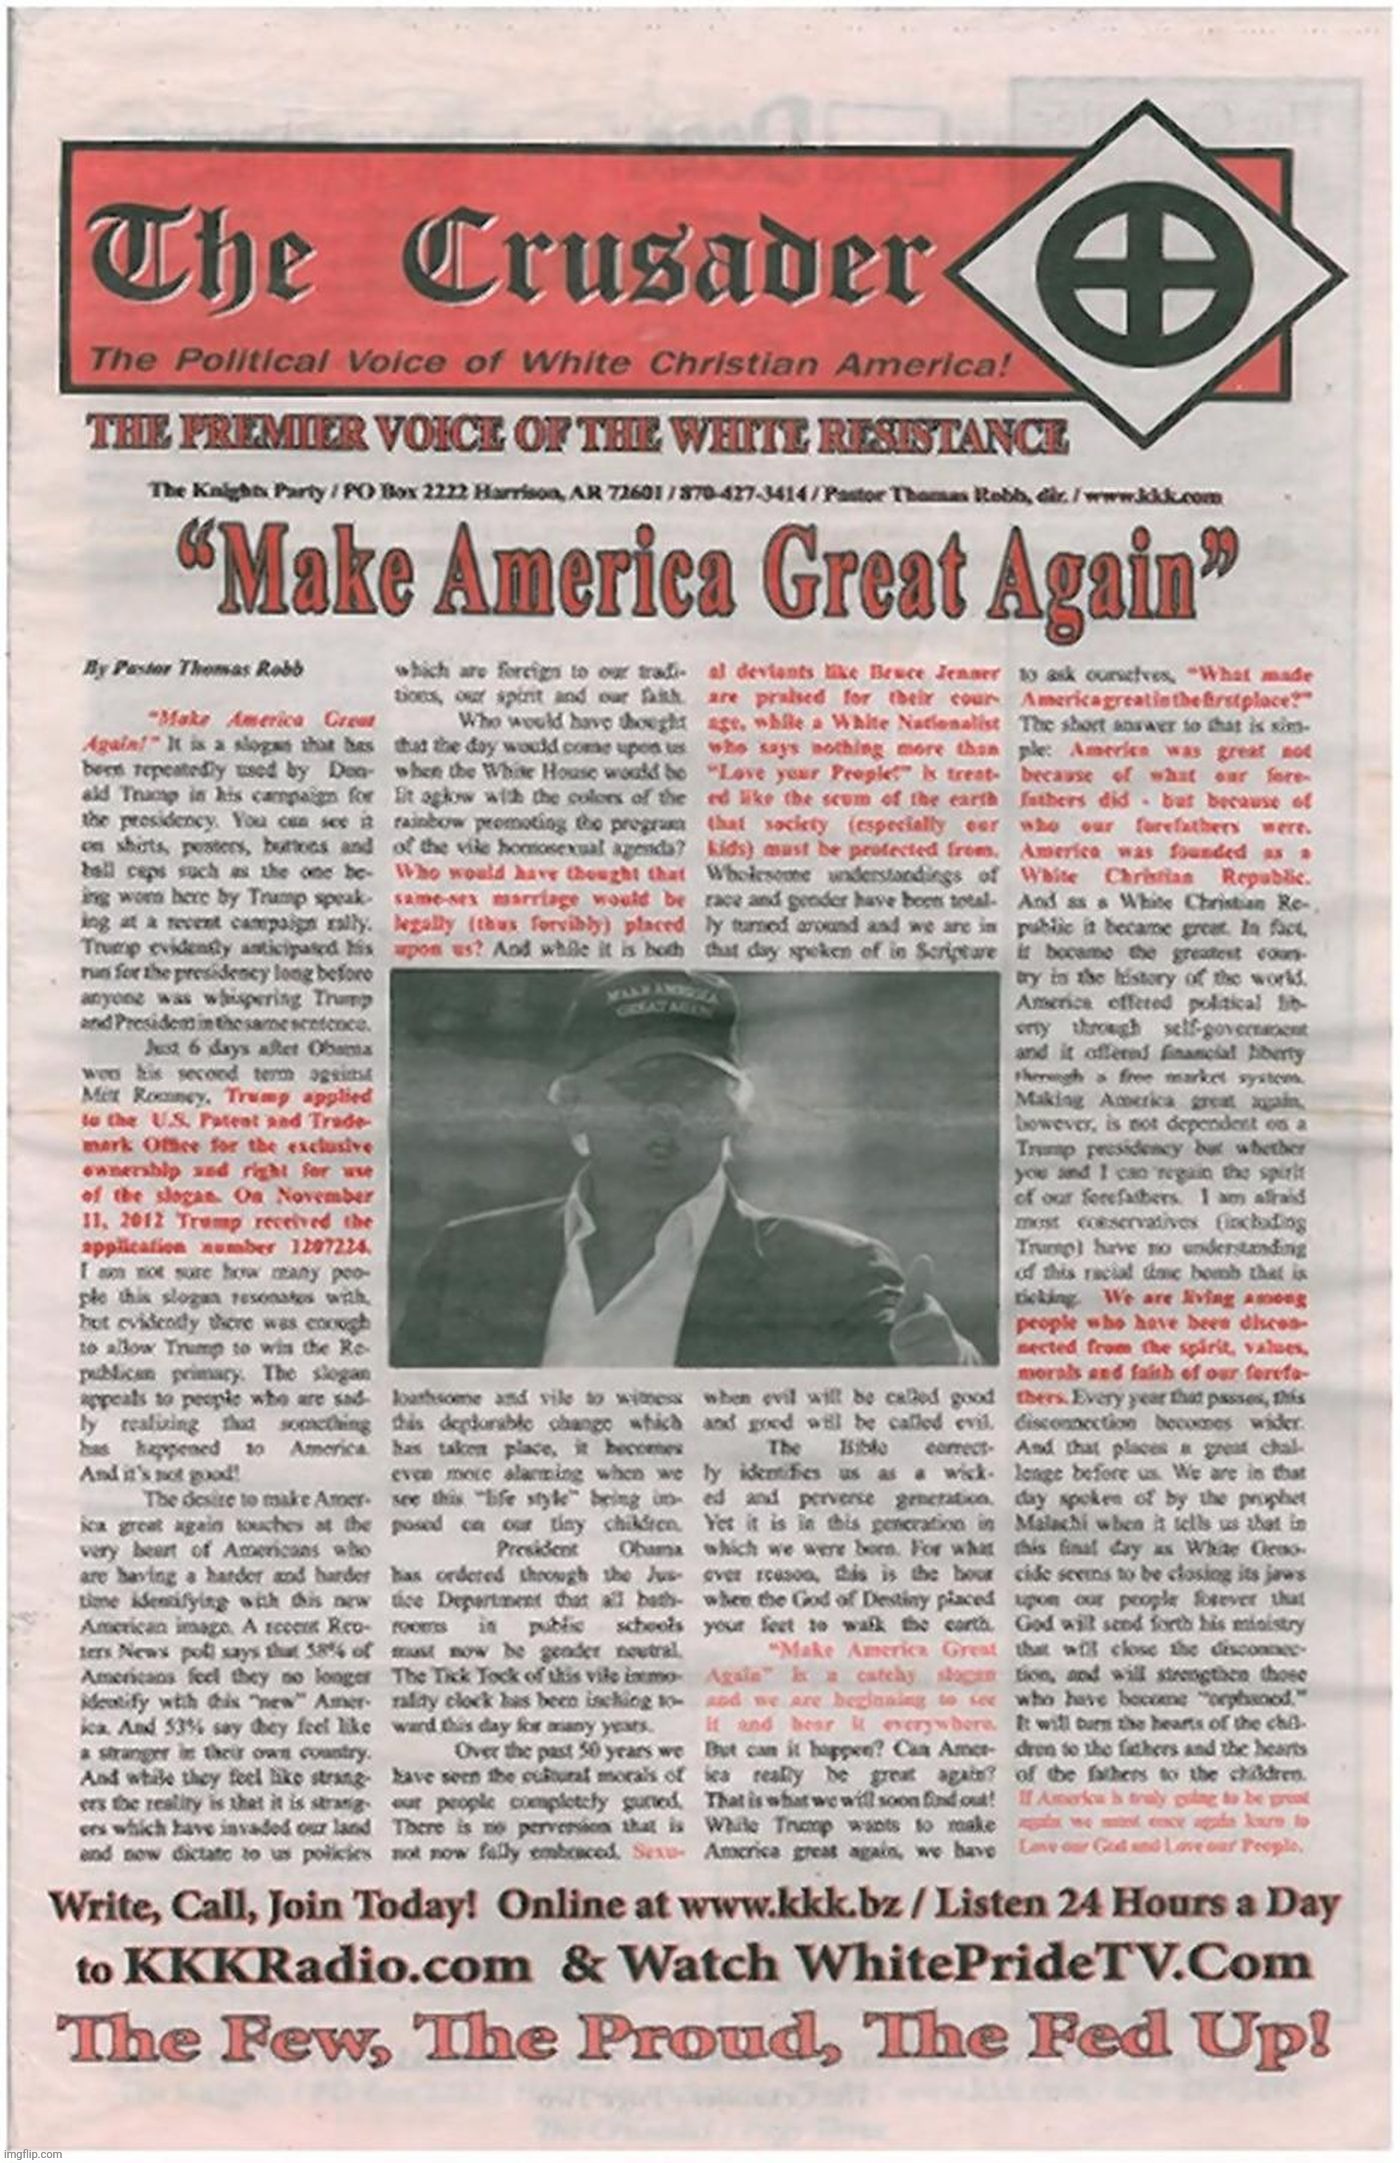 Trump KKK paper endorsement | image tagged in trump endorsed by kkk paper | made w/ Imgflip meme maker